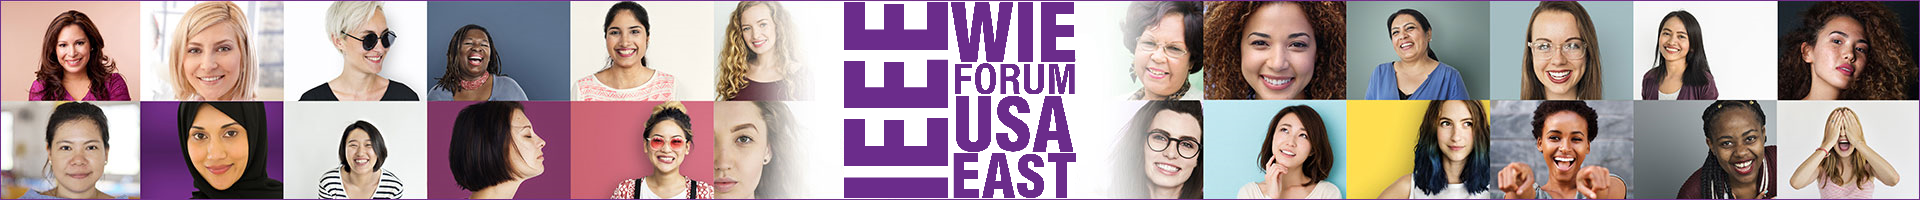 IEEE WIE Forum USA East | Region 1 and Region 2